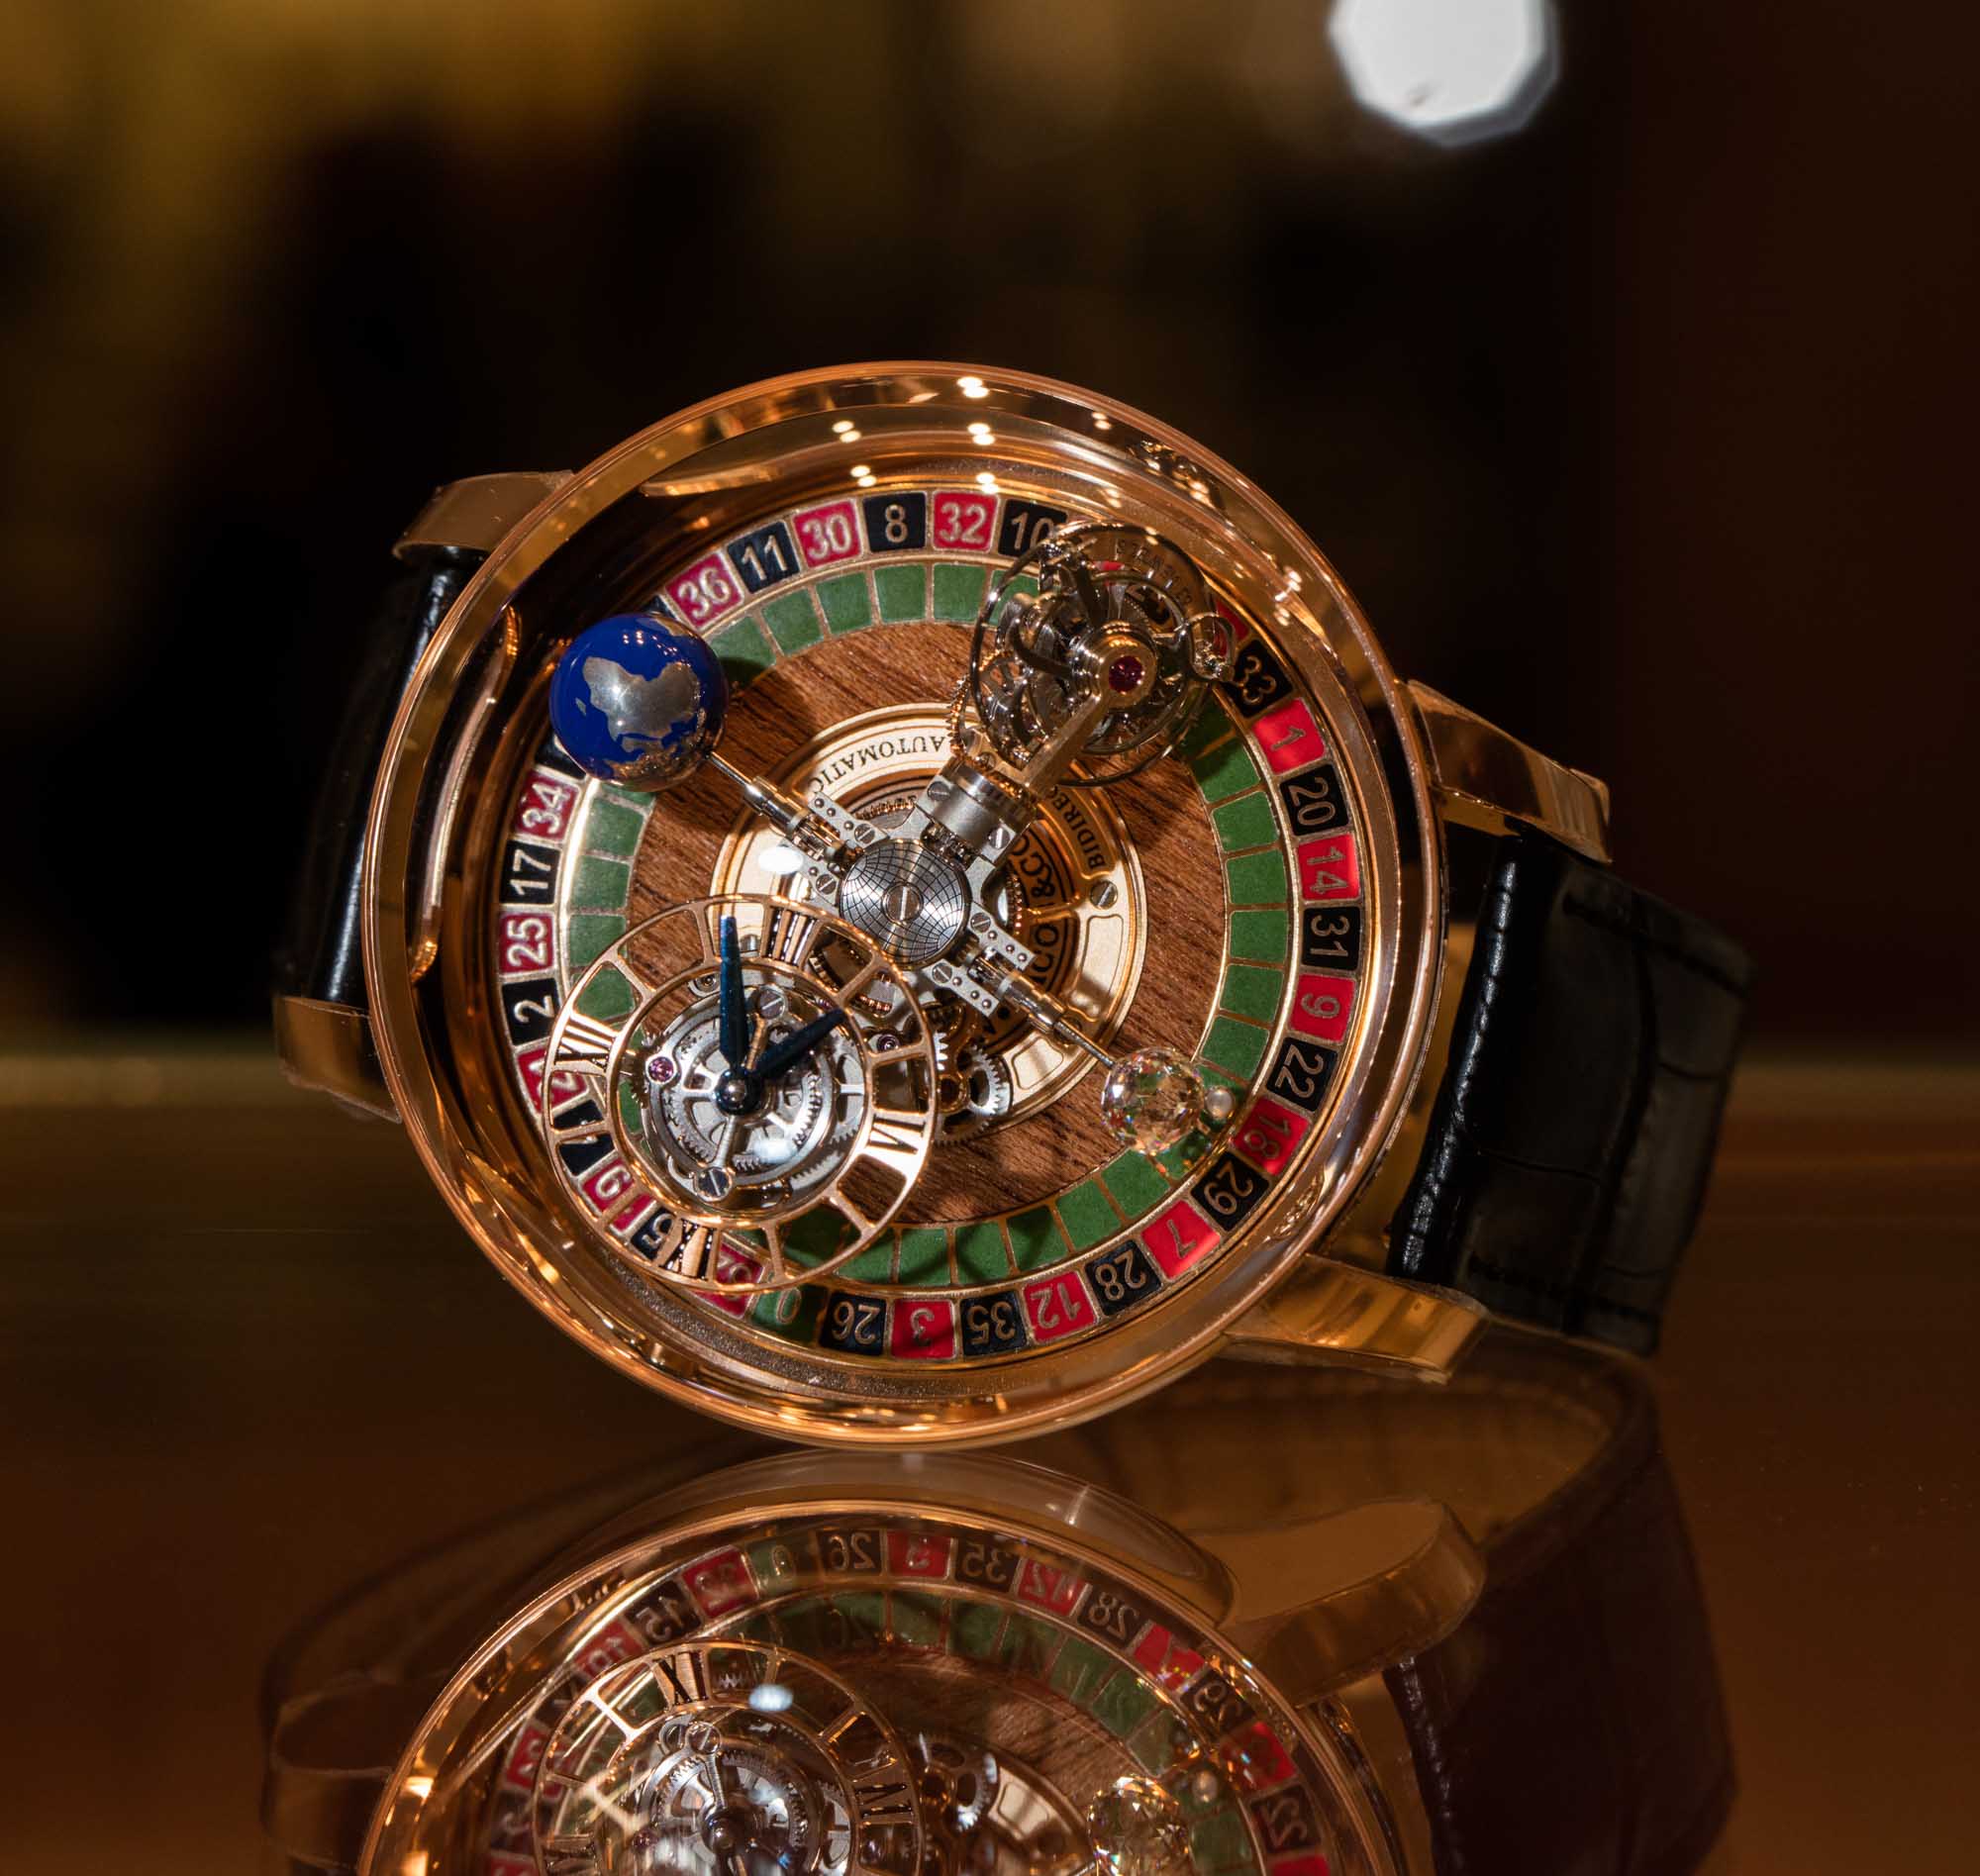 Cartier Bellagio Hotel & Casino: fine jewelry, watches